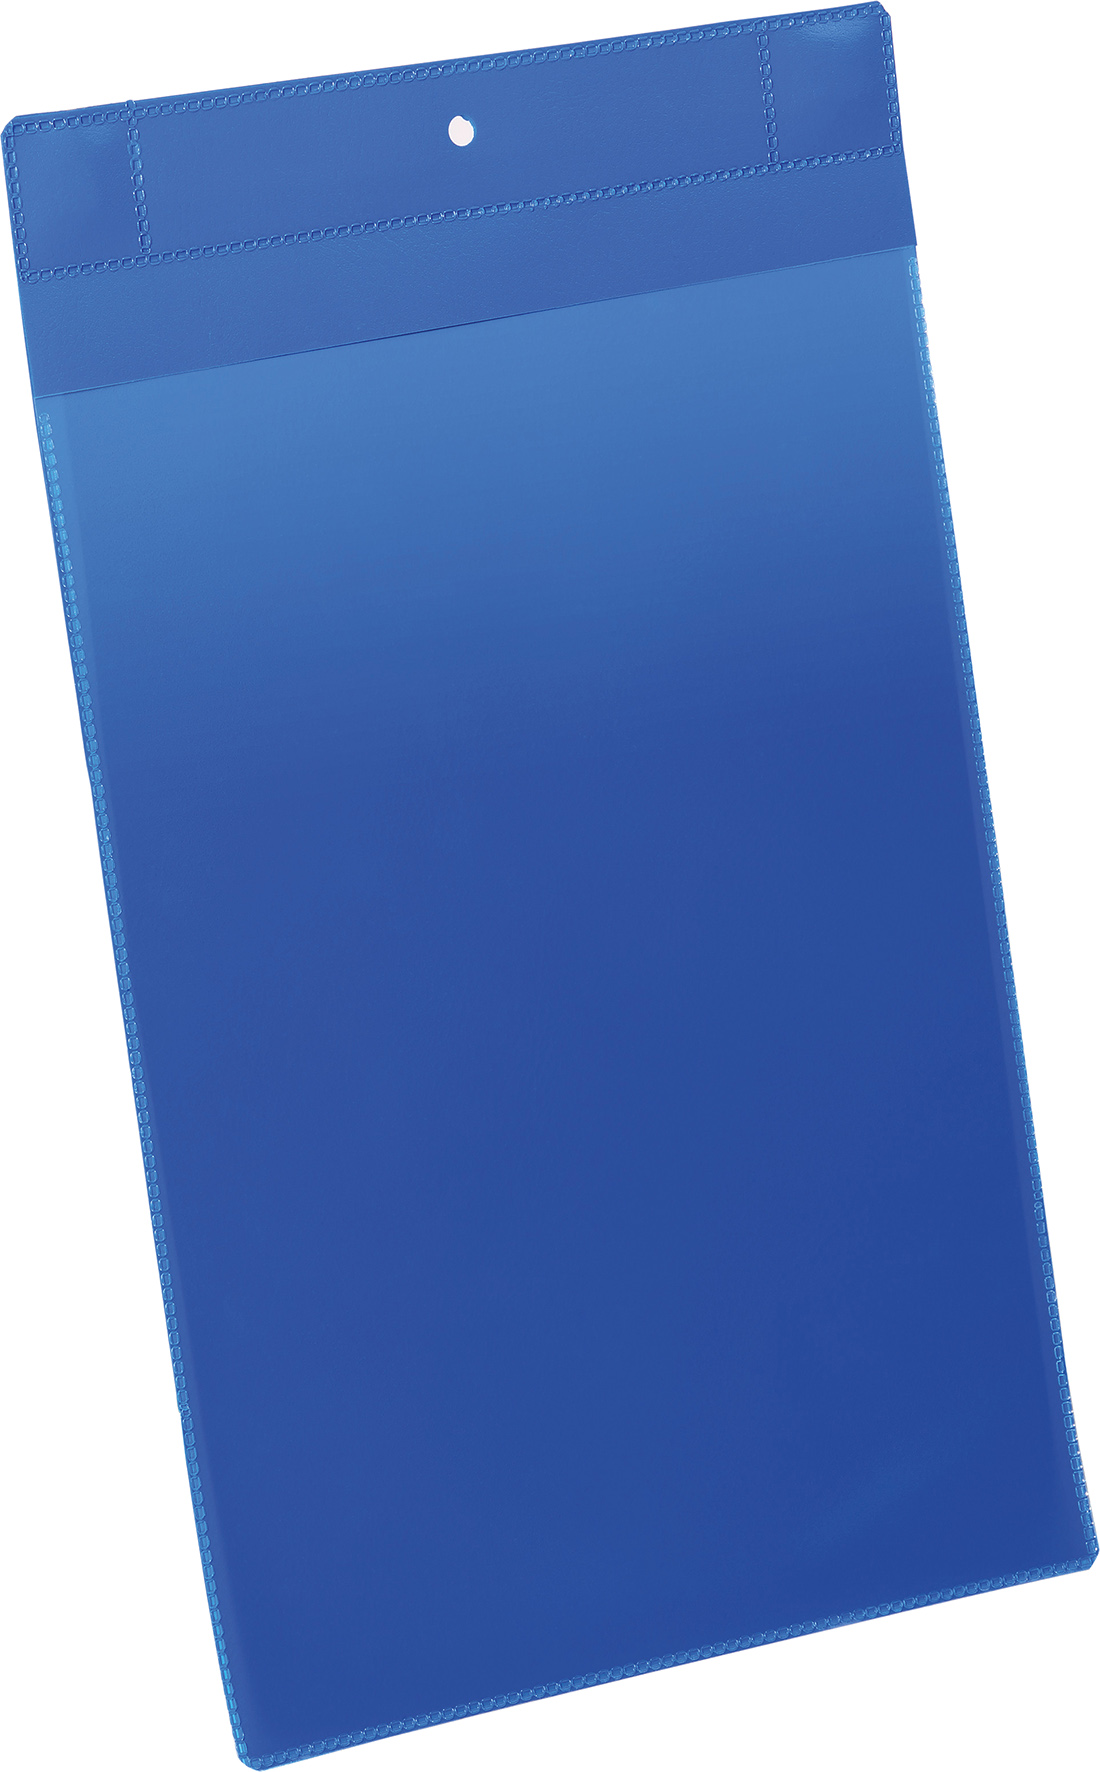 [8552725] Plastficka Plus A4S magnet blå